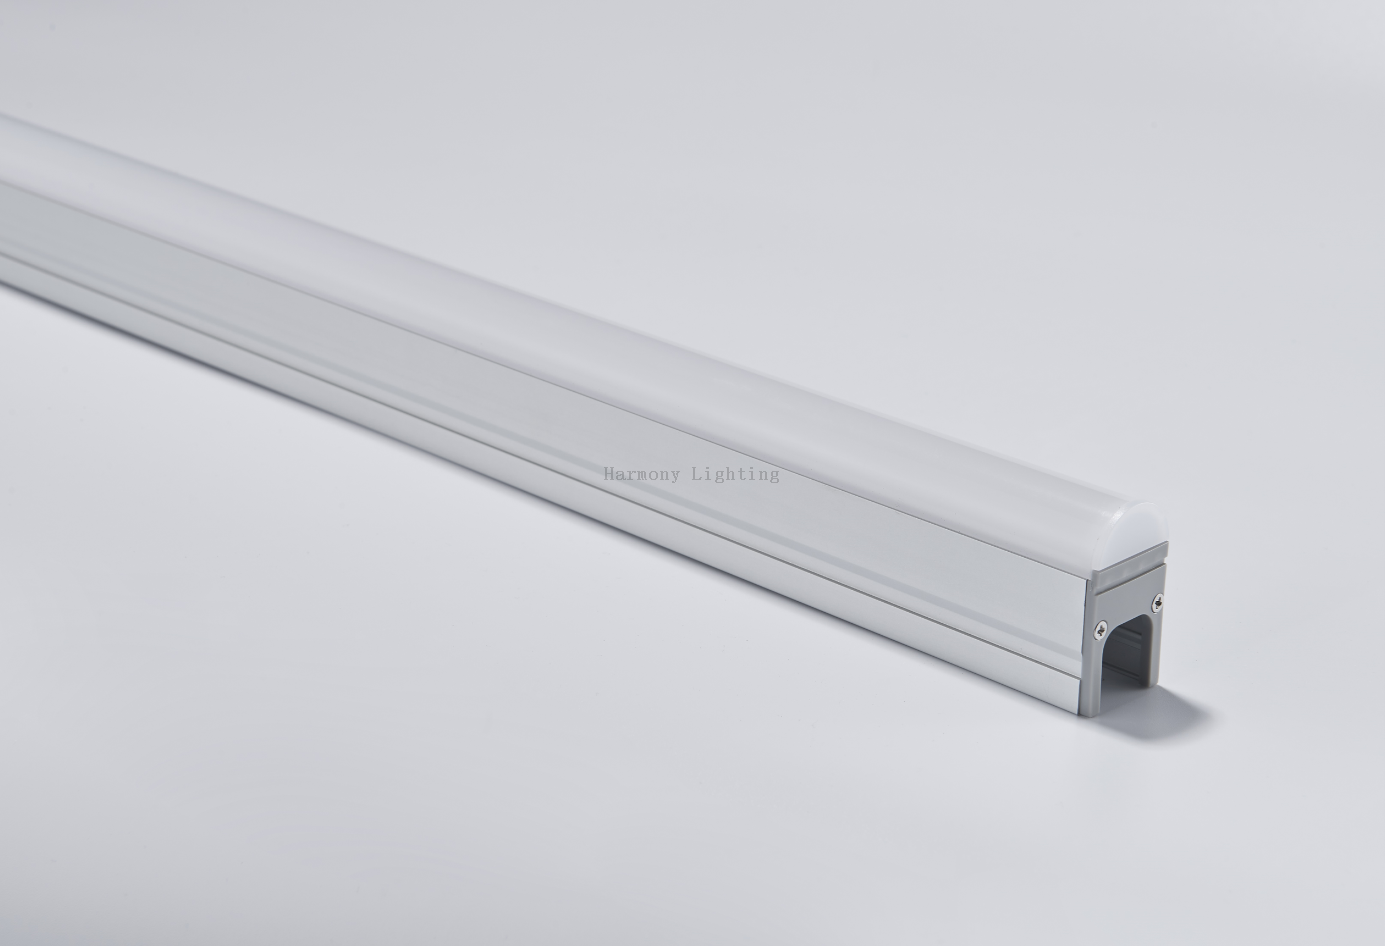 RH-C25 12W IP65 LED Linear Tri-Proof Light Accessories Vapor Tight Light Housing for Waterproof Lights